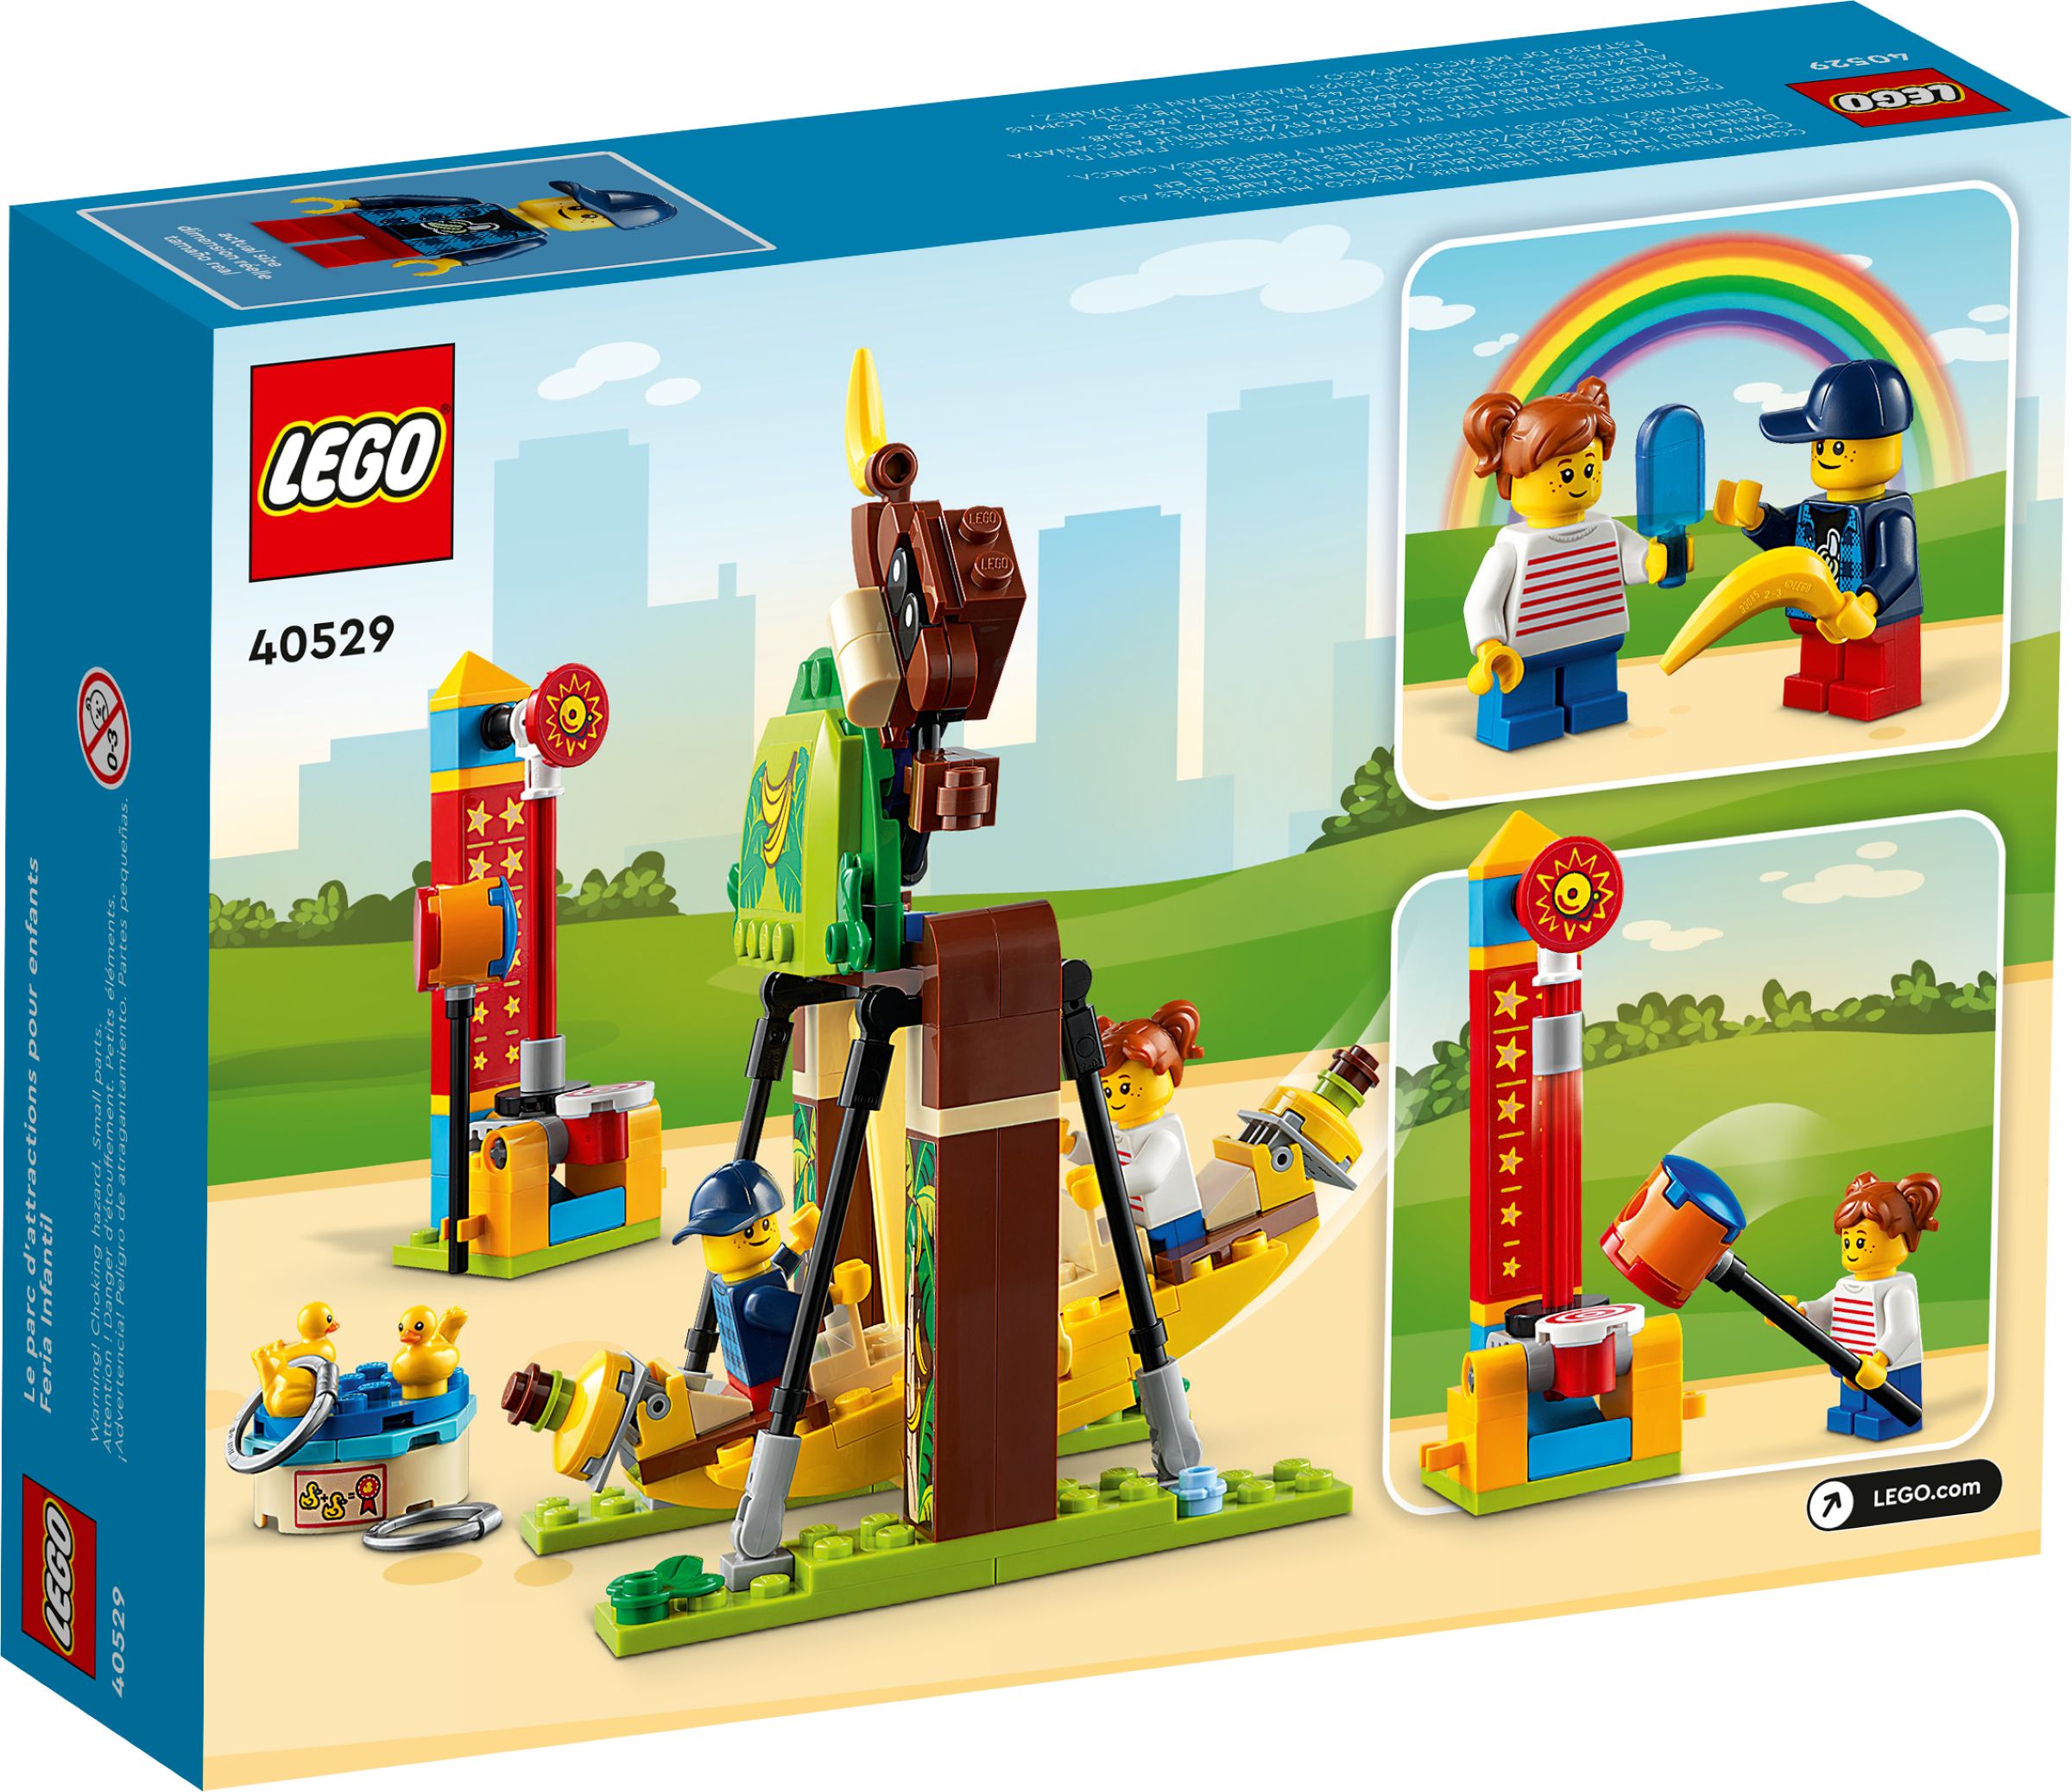 LEGO Miscellaneous 40529 Kinder-Erlebnispark LEGO_40529_alt2.jpg